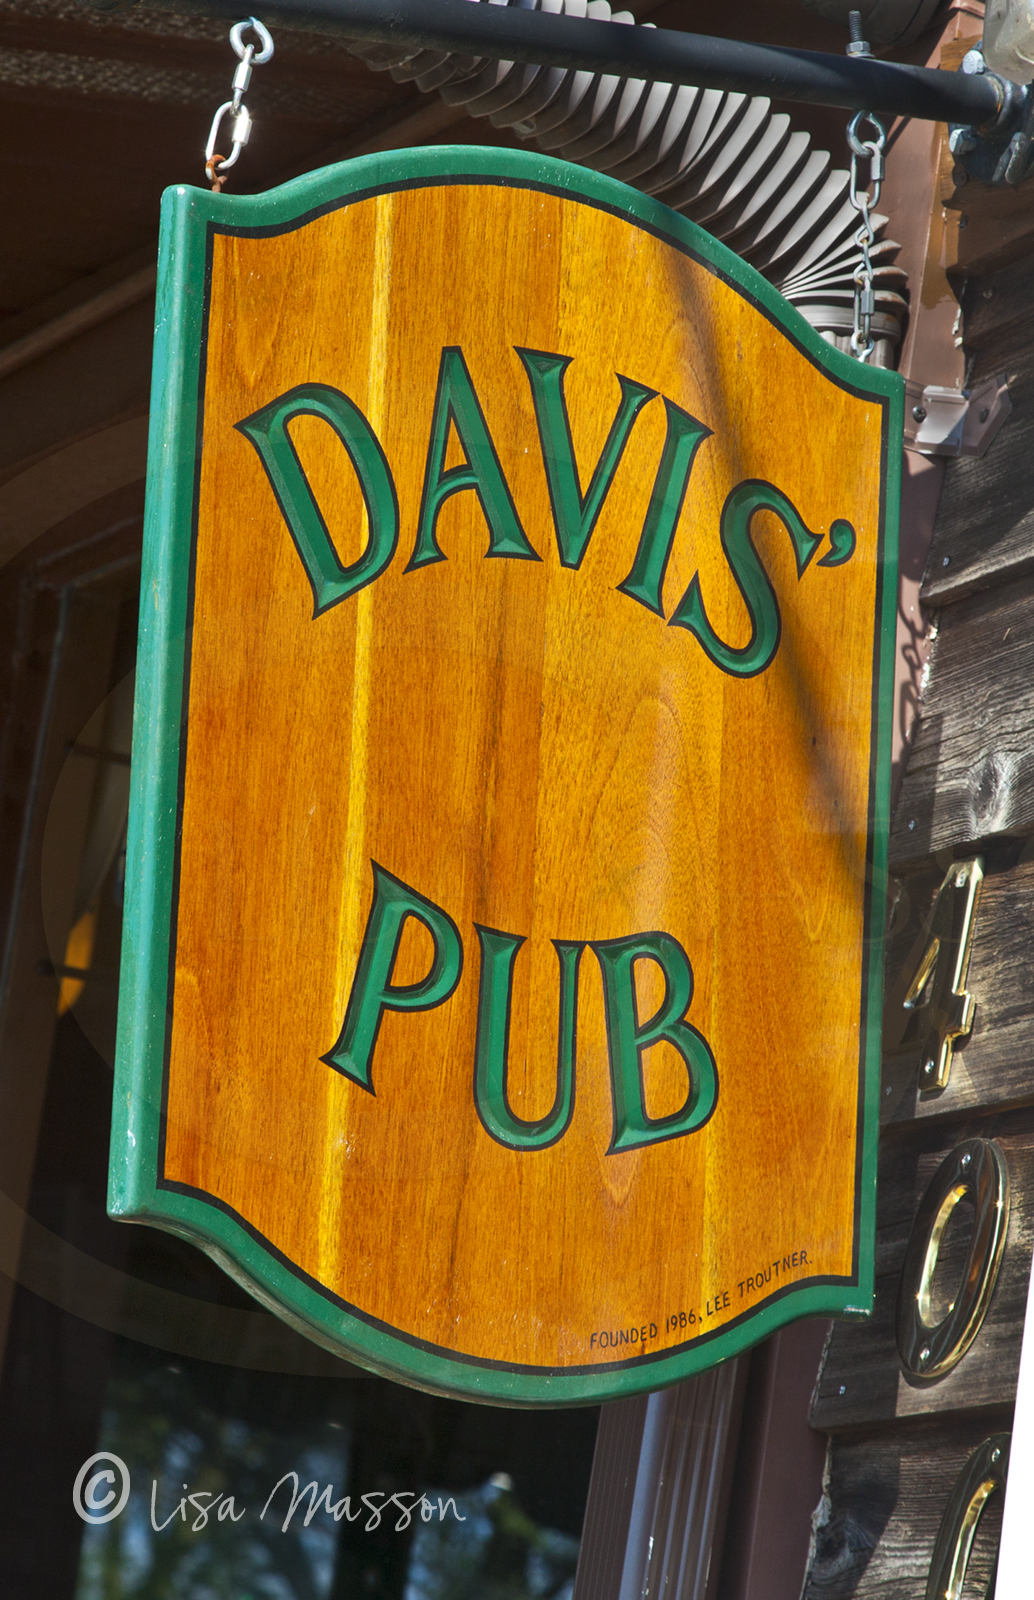 Eastport Davis Pub 3879.jpg